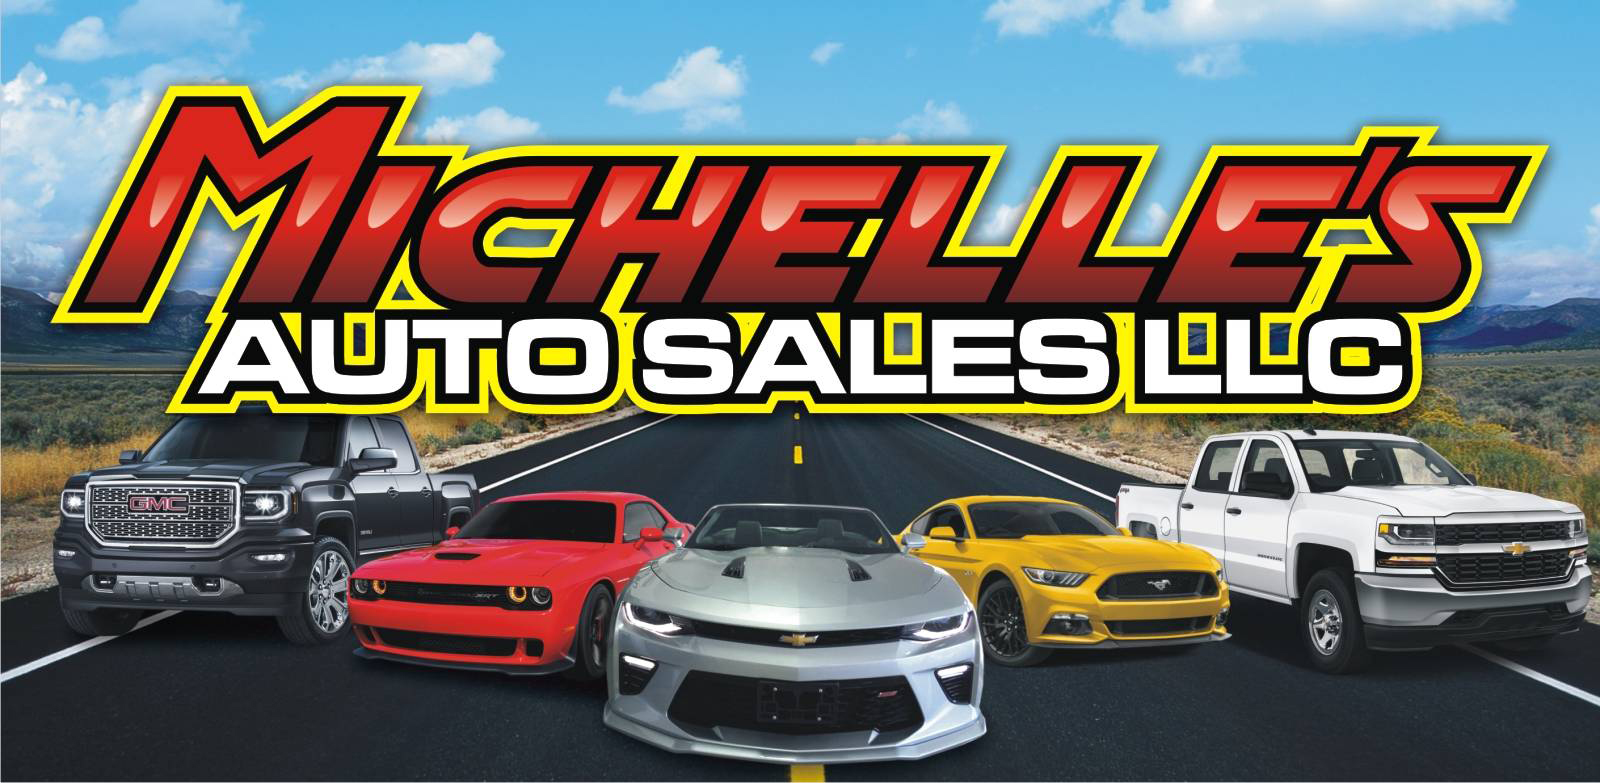 Michelle's Auto Sales LLC